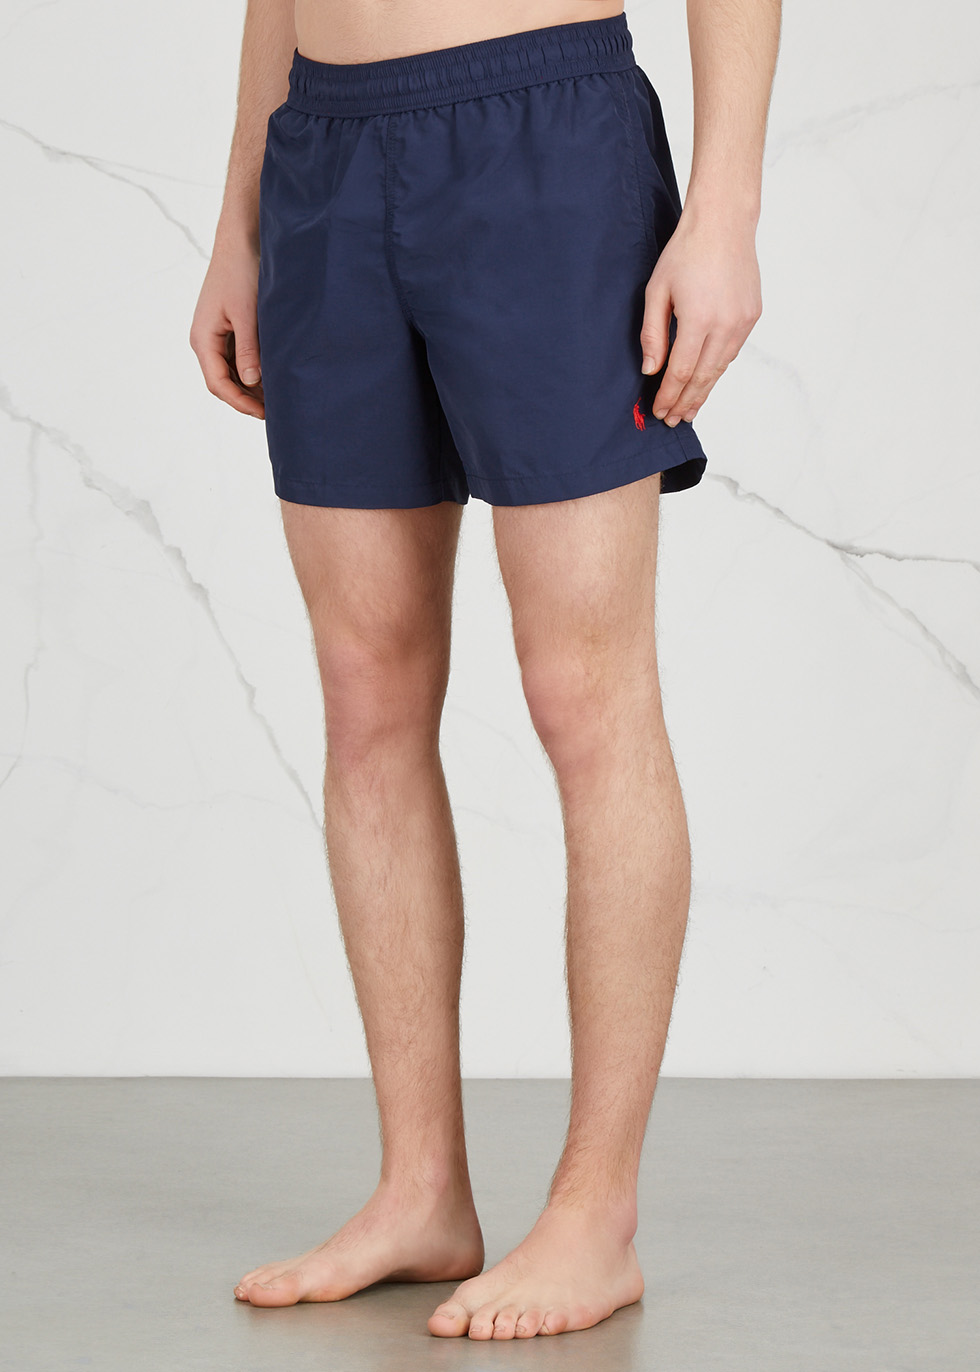 ralph lauren navy shorts